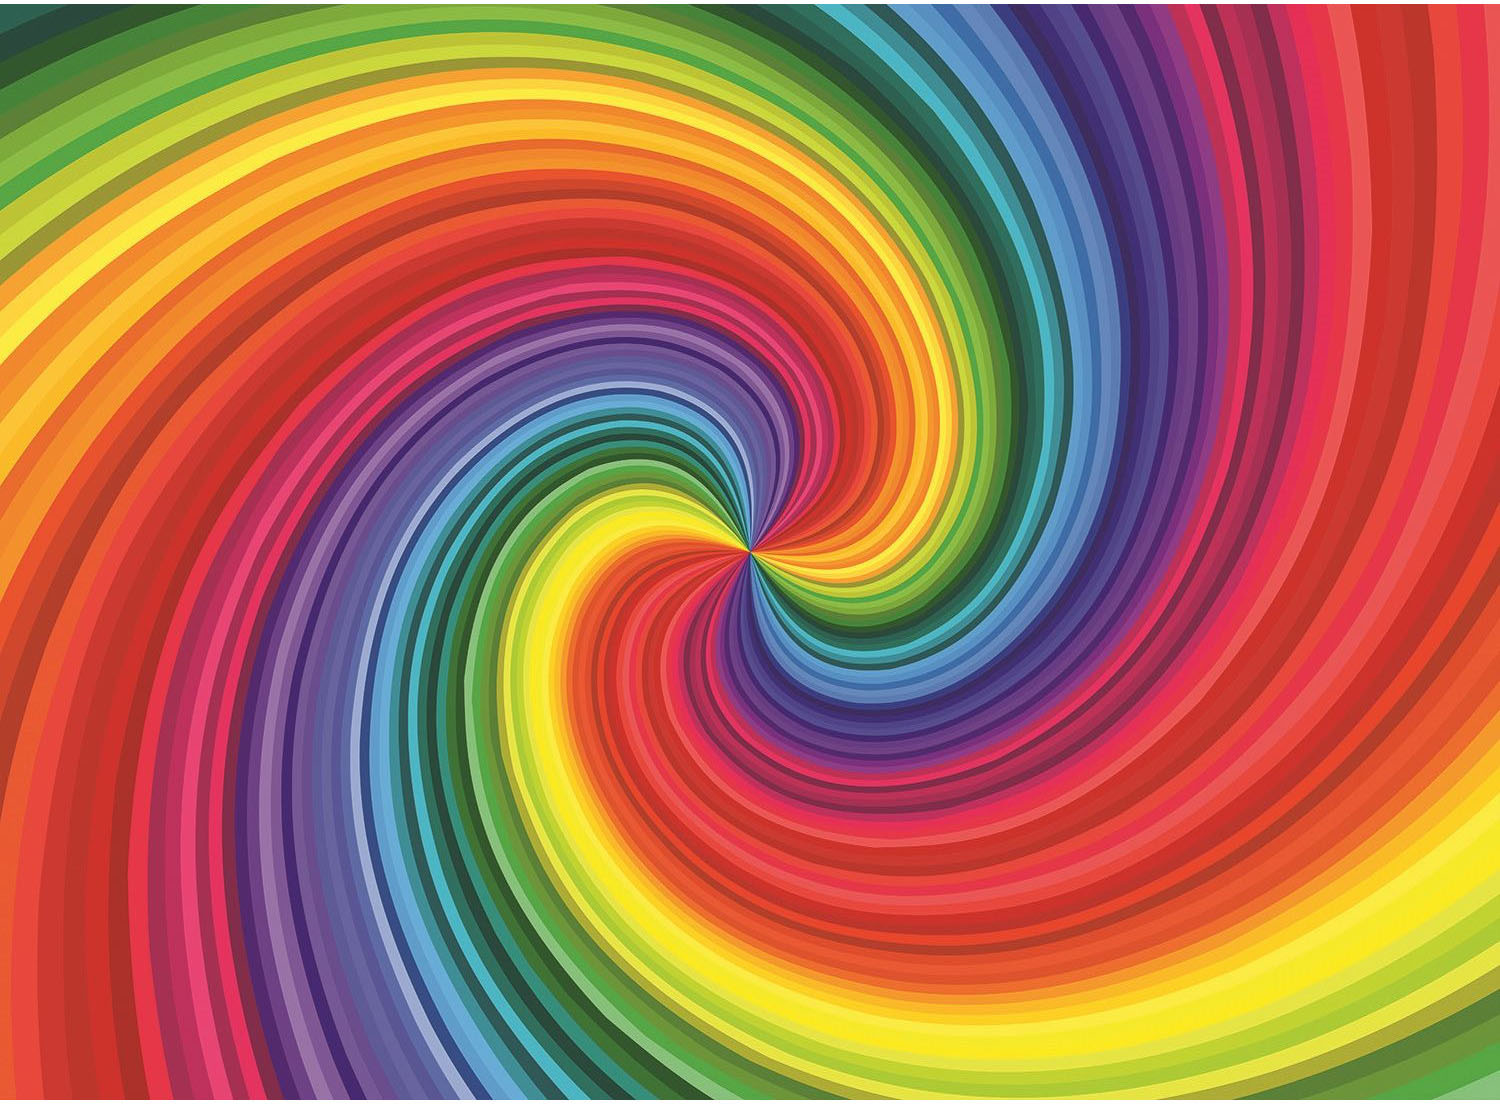 Puzzle Nova Rainbow Swirl 1000 peças